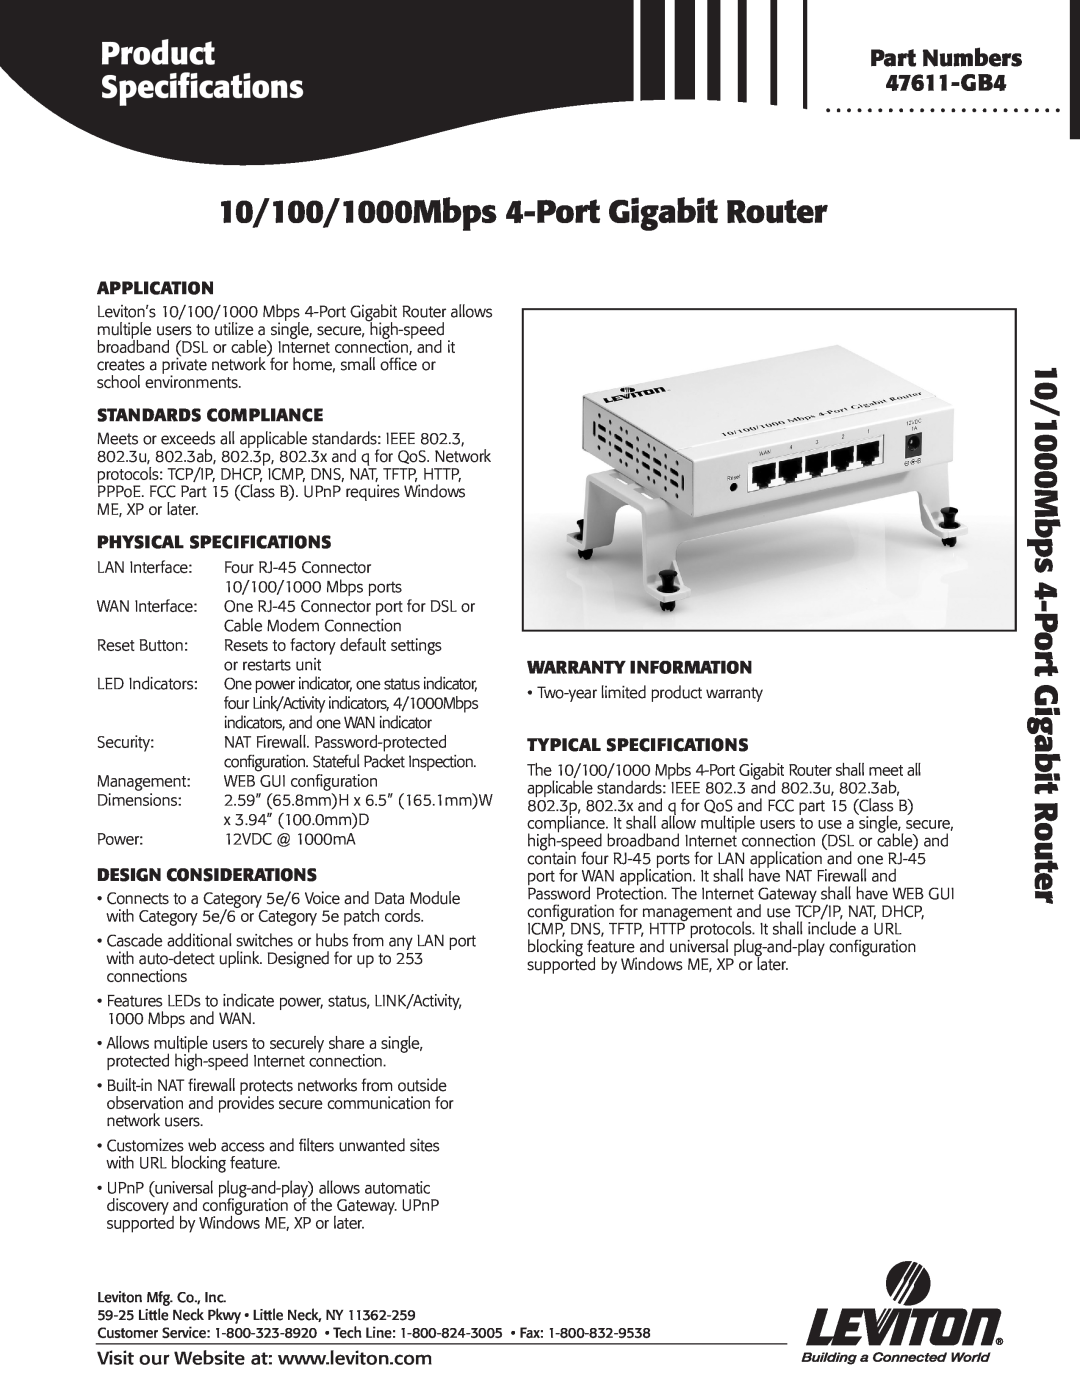 Leviton warranty 10/100/1000Mbps 4-Port Gigabit Router, 10/1000Mbps 4-Port Gigabit Router, Part Numbers 47611-GB4 